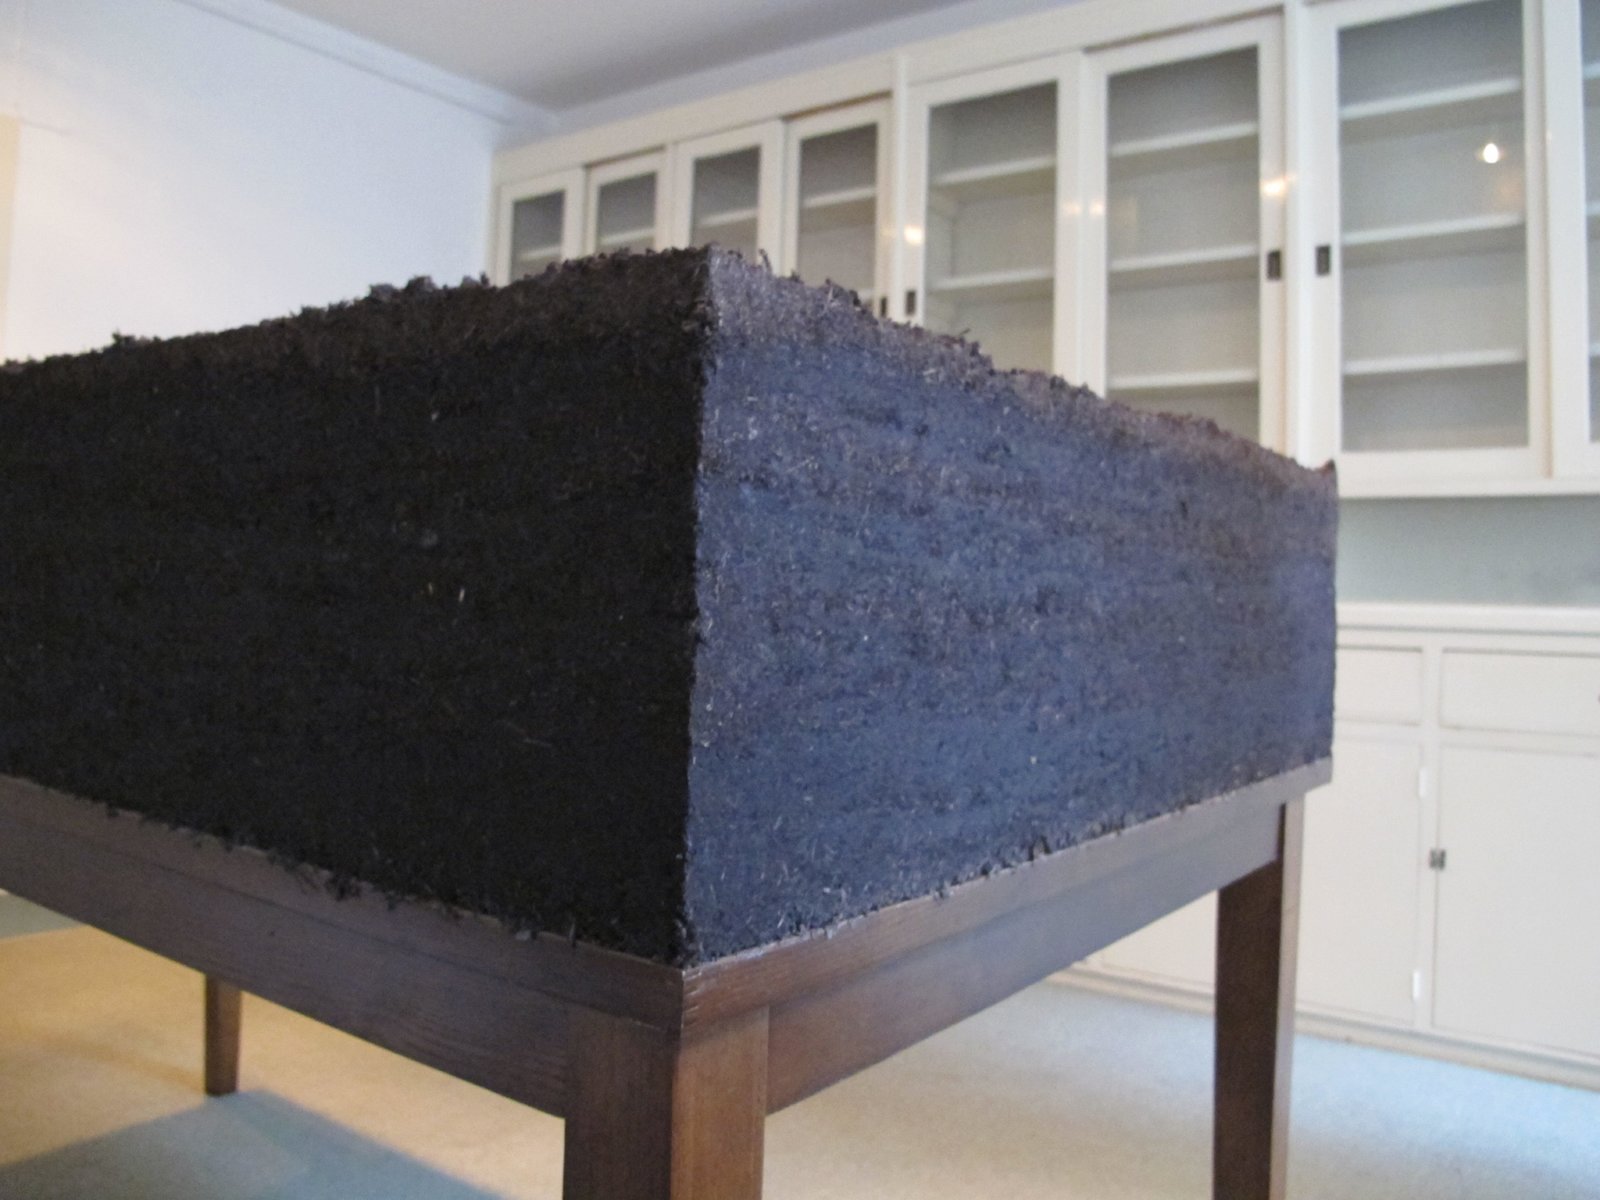 Abbas Akhavan, Dirt/Table (detail), 2012, topsoil, water, wooden table, 42 x 36 x 72 in. (106 x 91 x 182 cm). Installation view, Study for a Garden, Delfina Foundation, London, UK, 2012